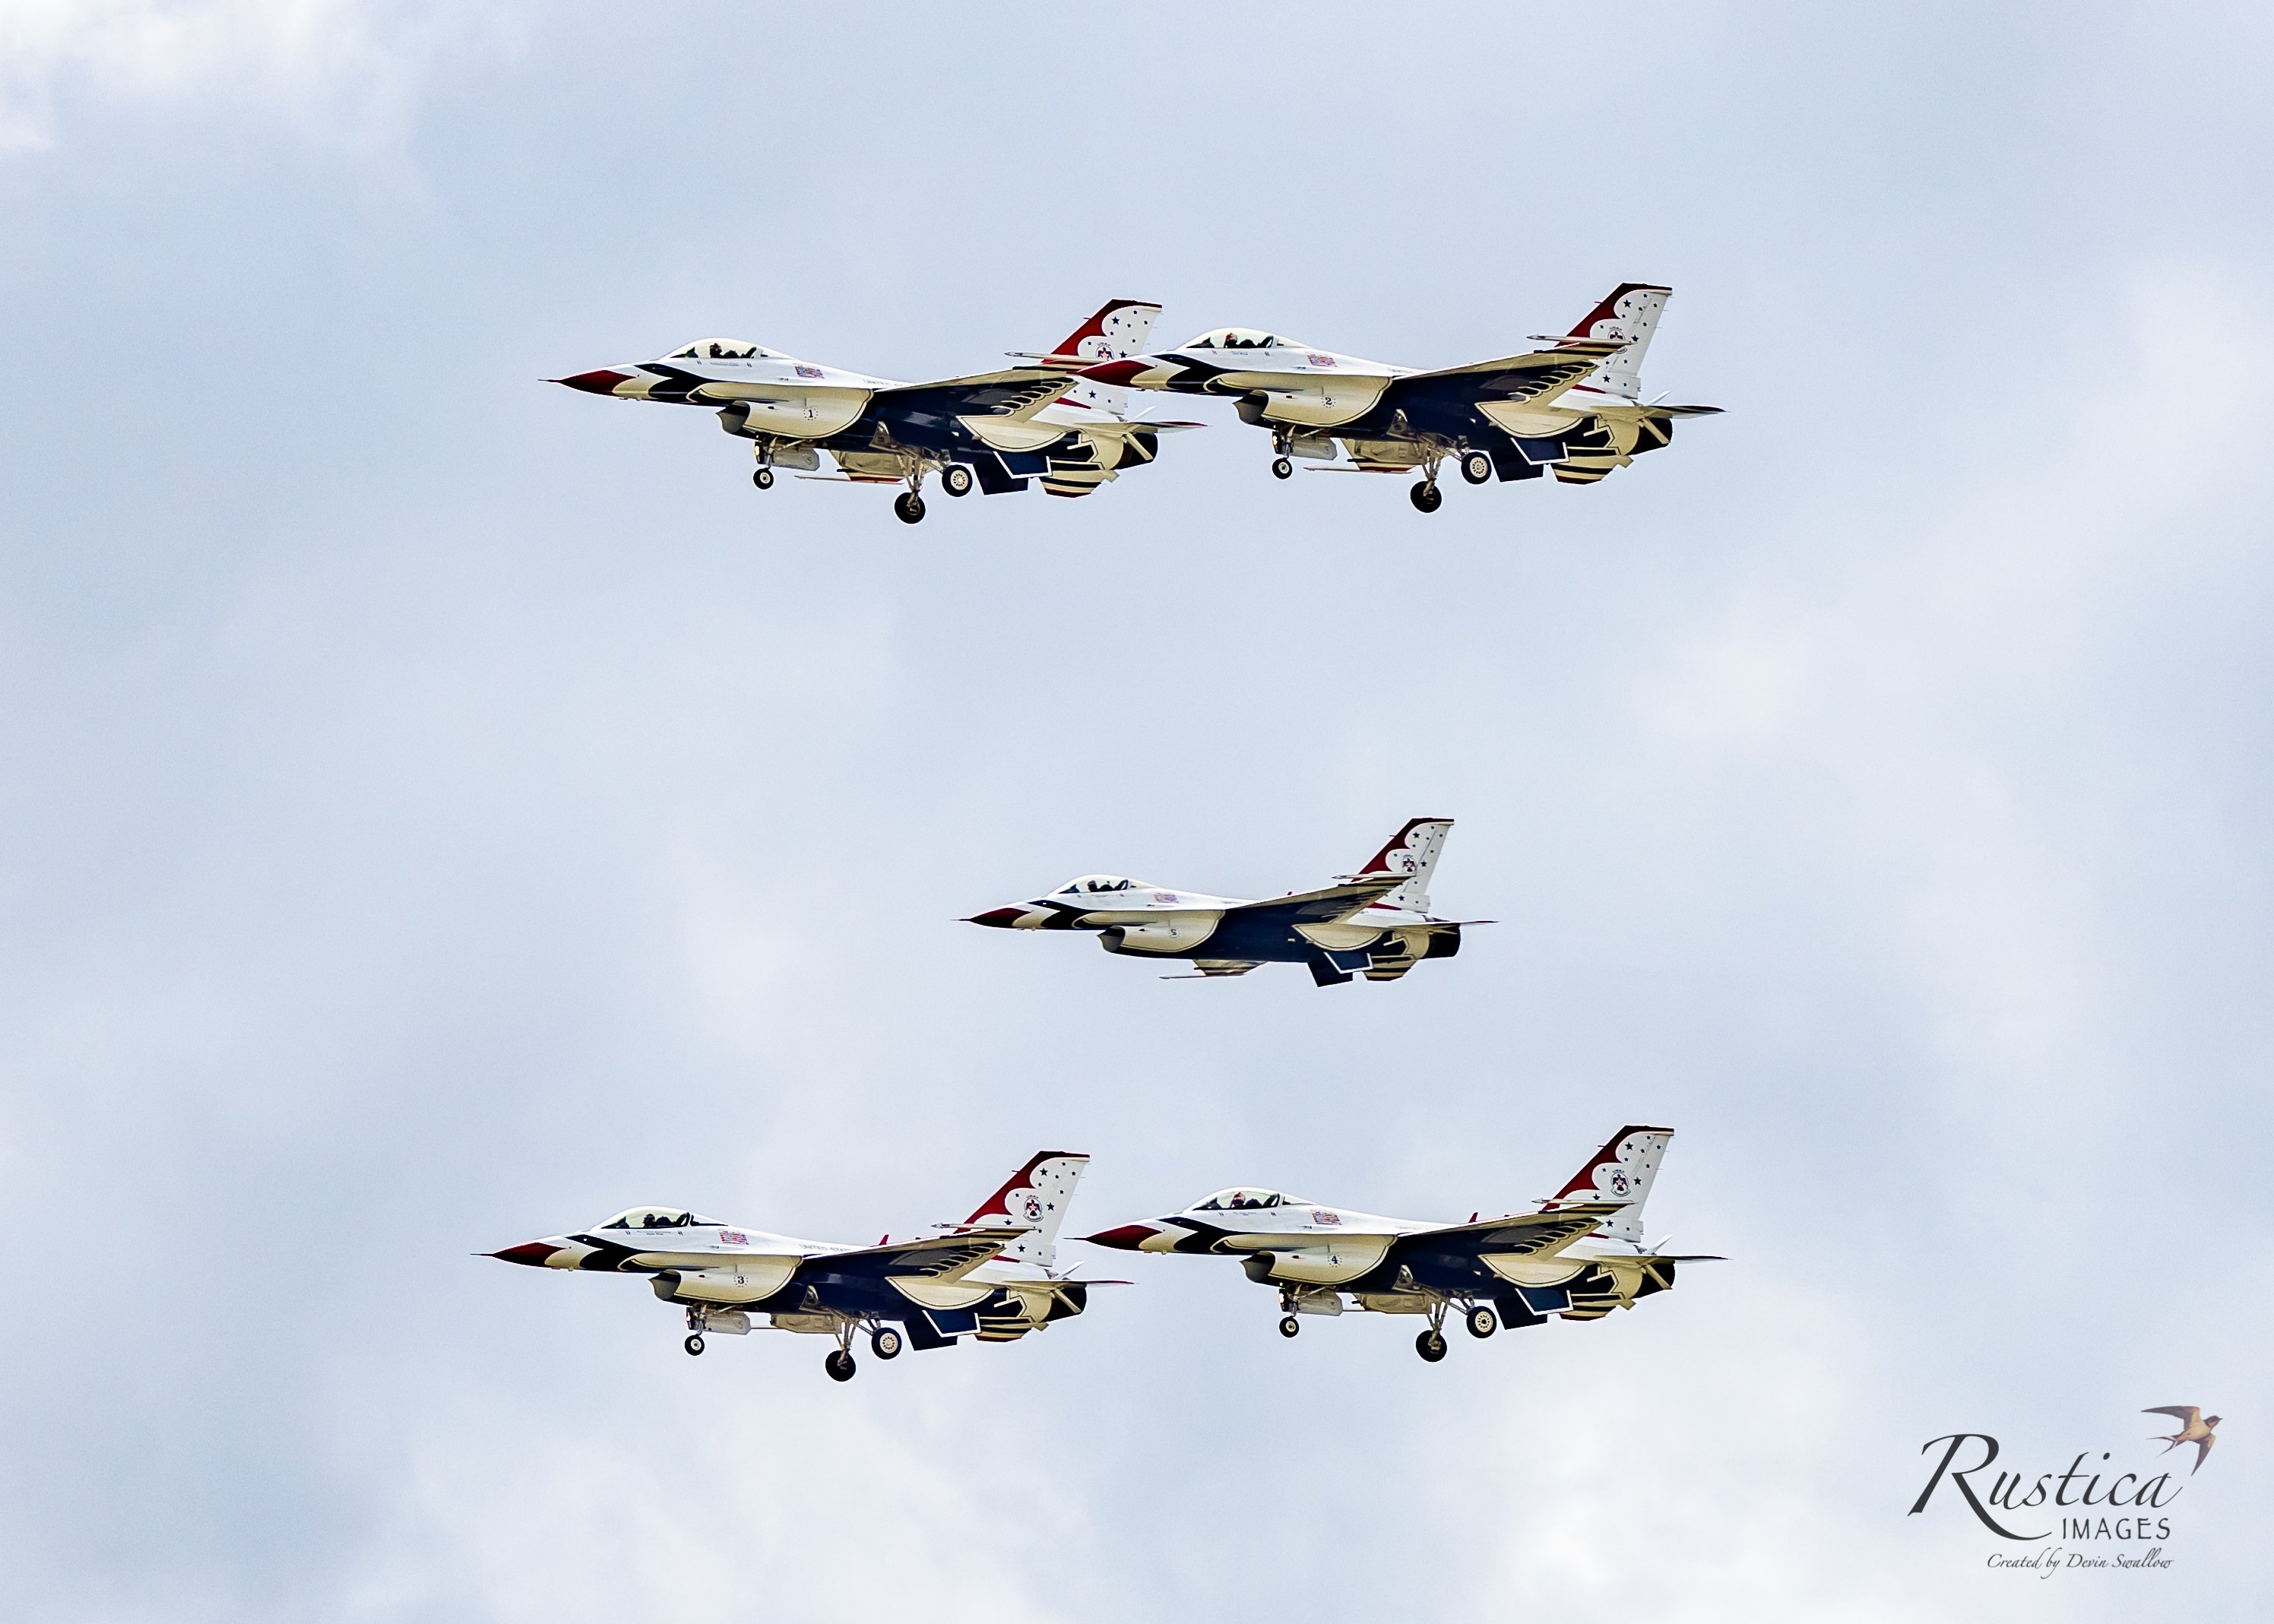 USAF Thunderbirds, Great Texas Airshow